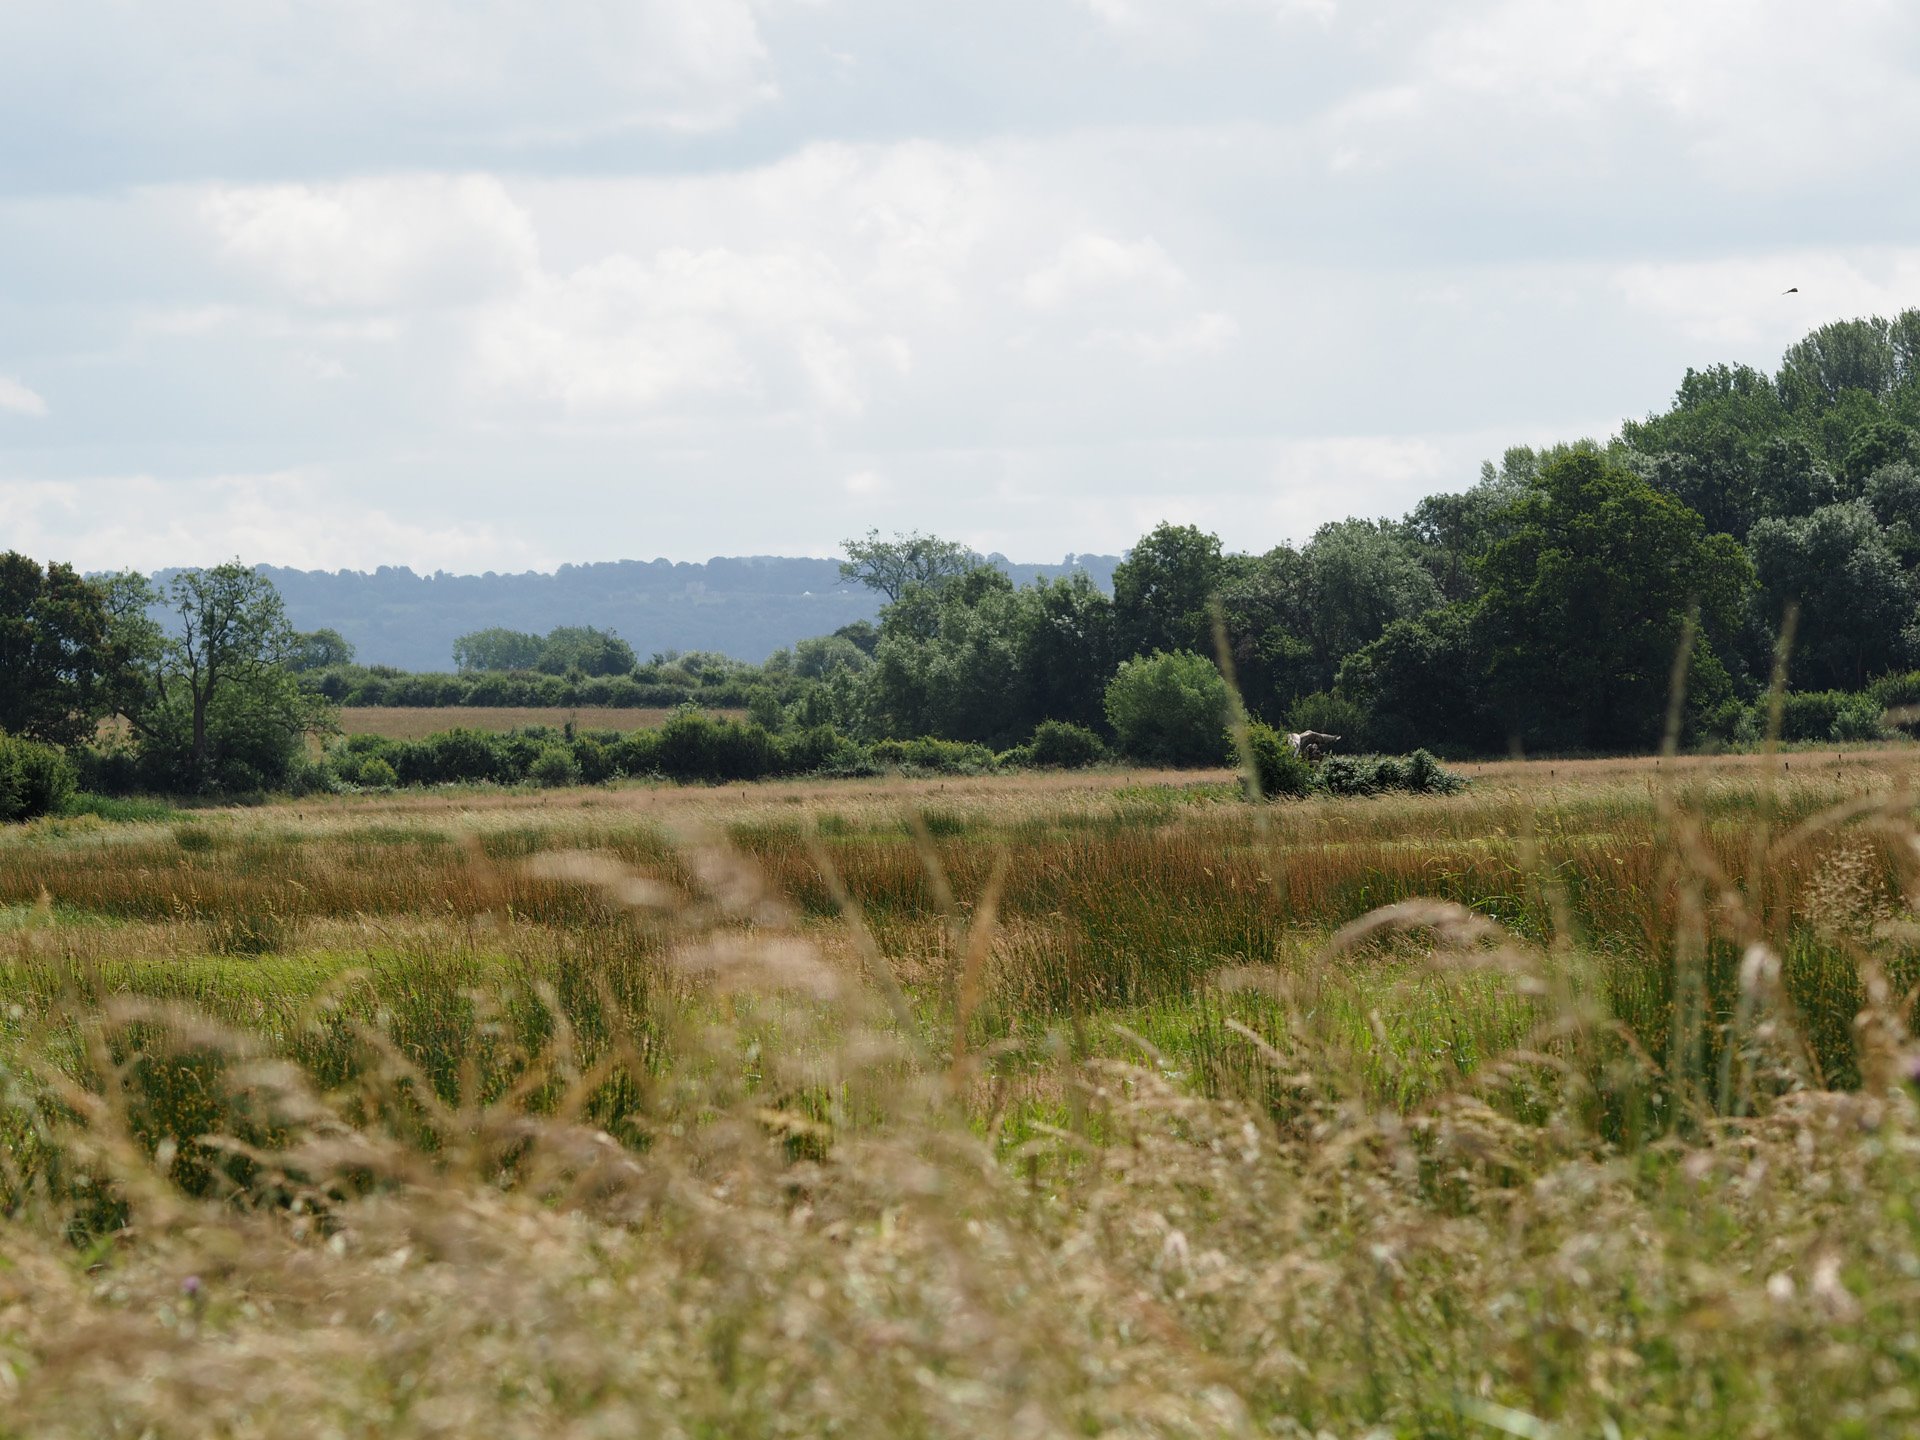 Biodiverse fields in rewilding wedding venue in the UK